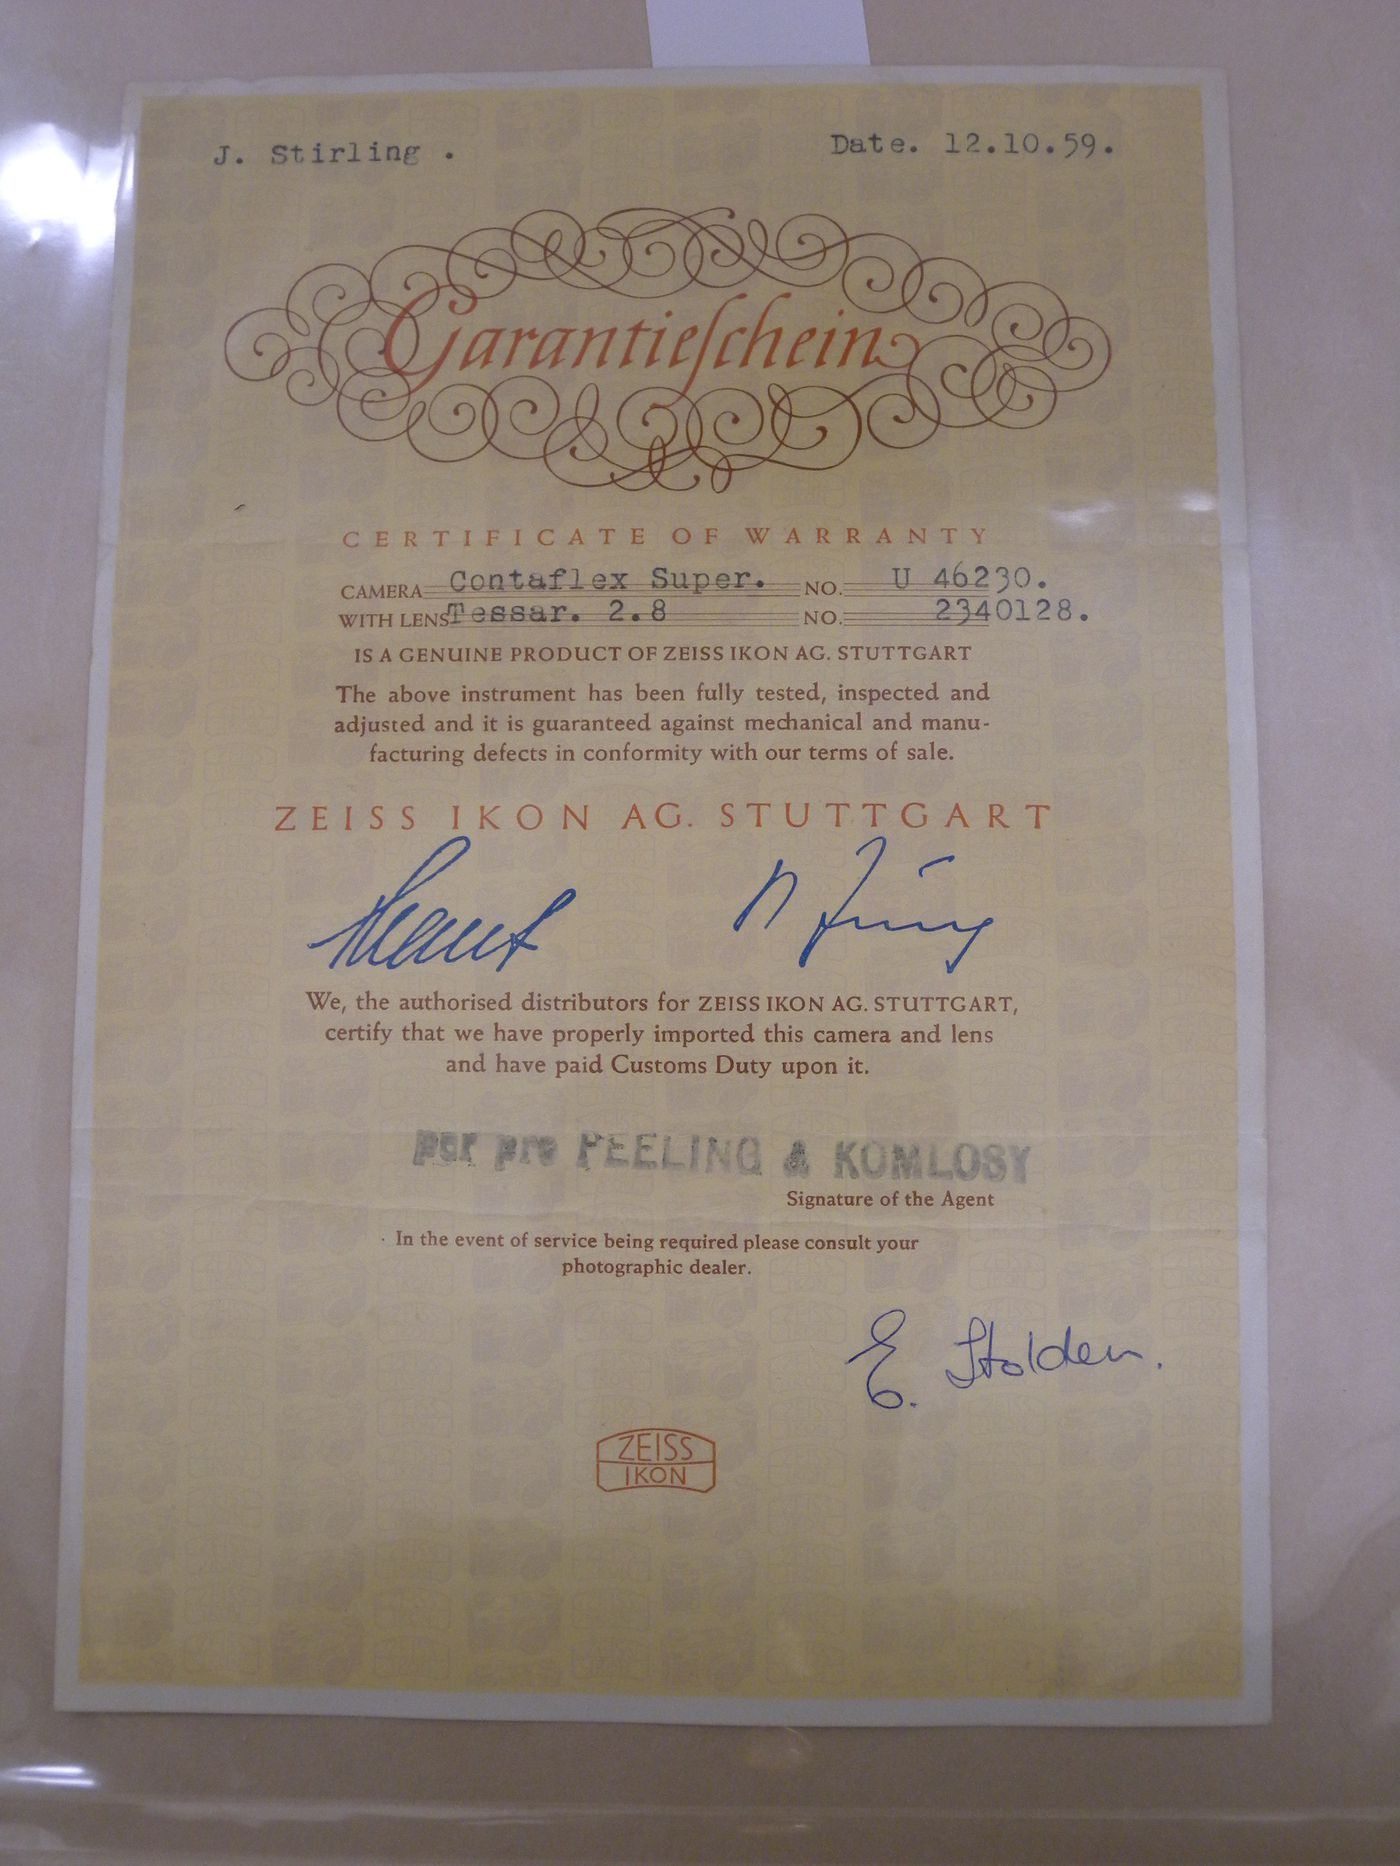 Certificate of warantee